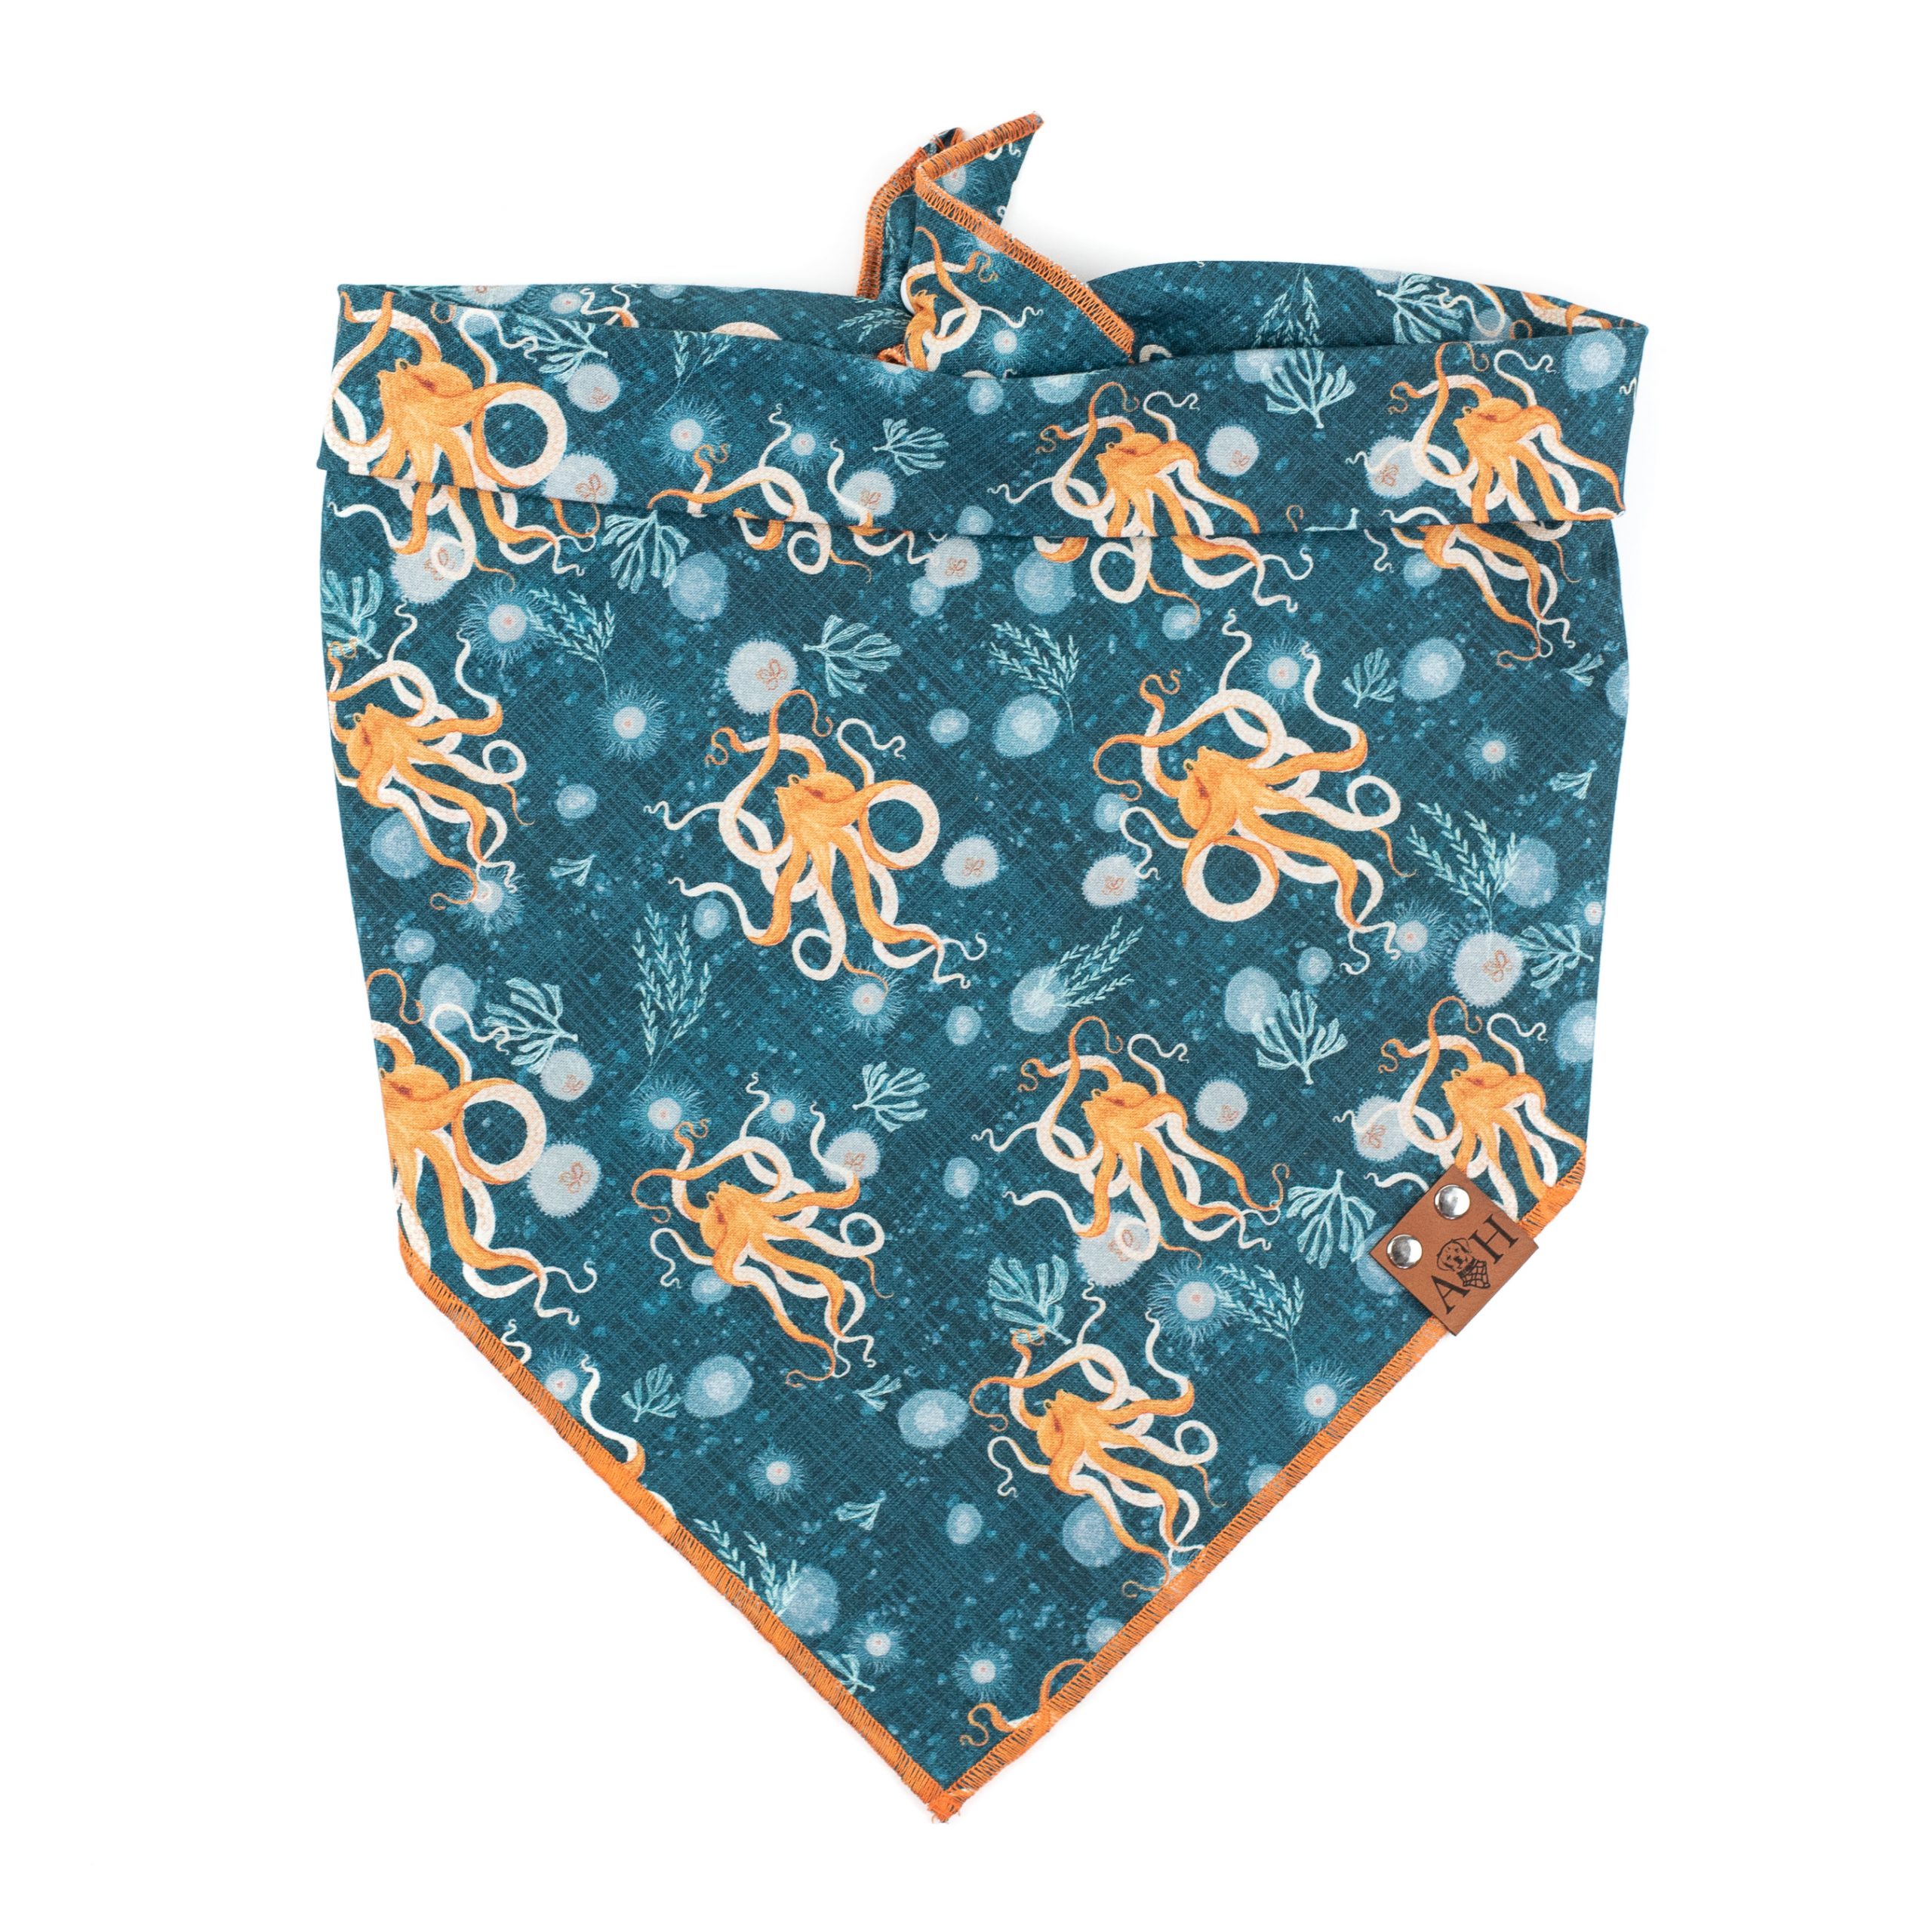 Octopus dog bandana with orange octopus on a blue ocean background